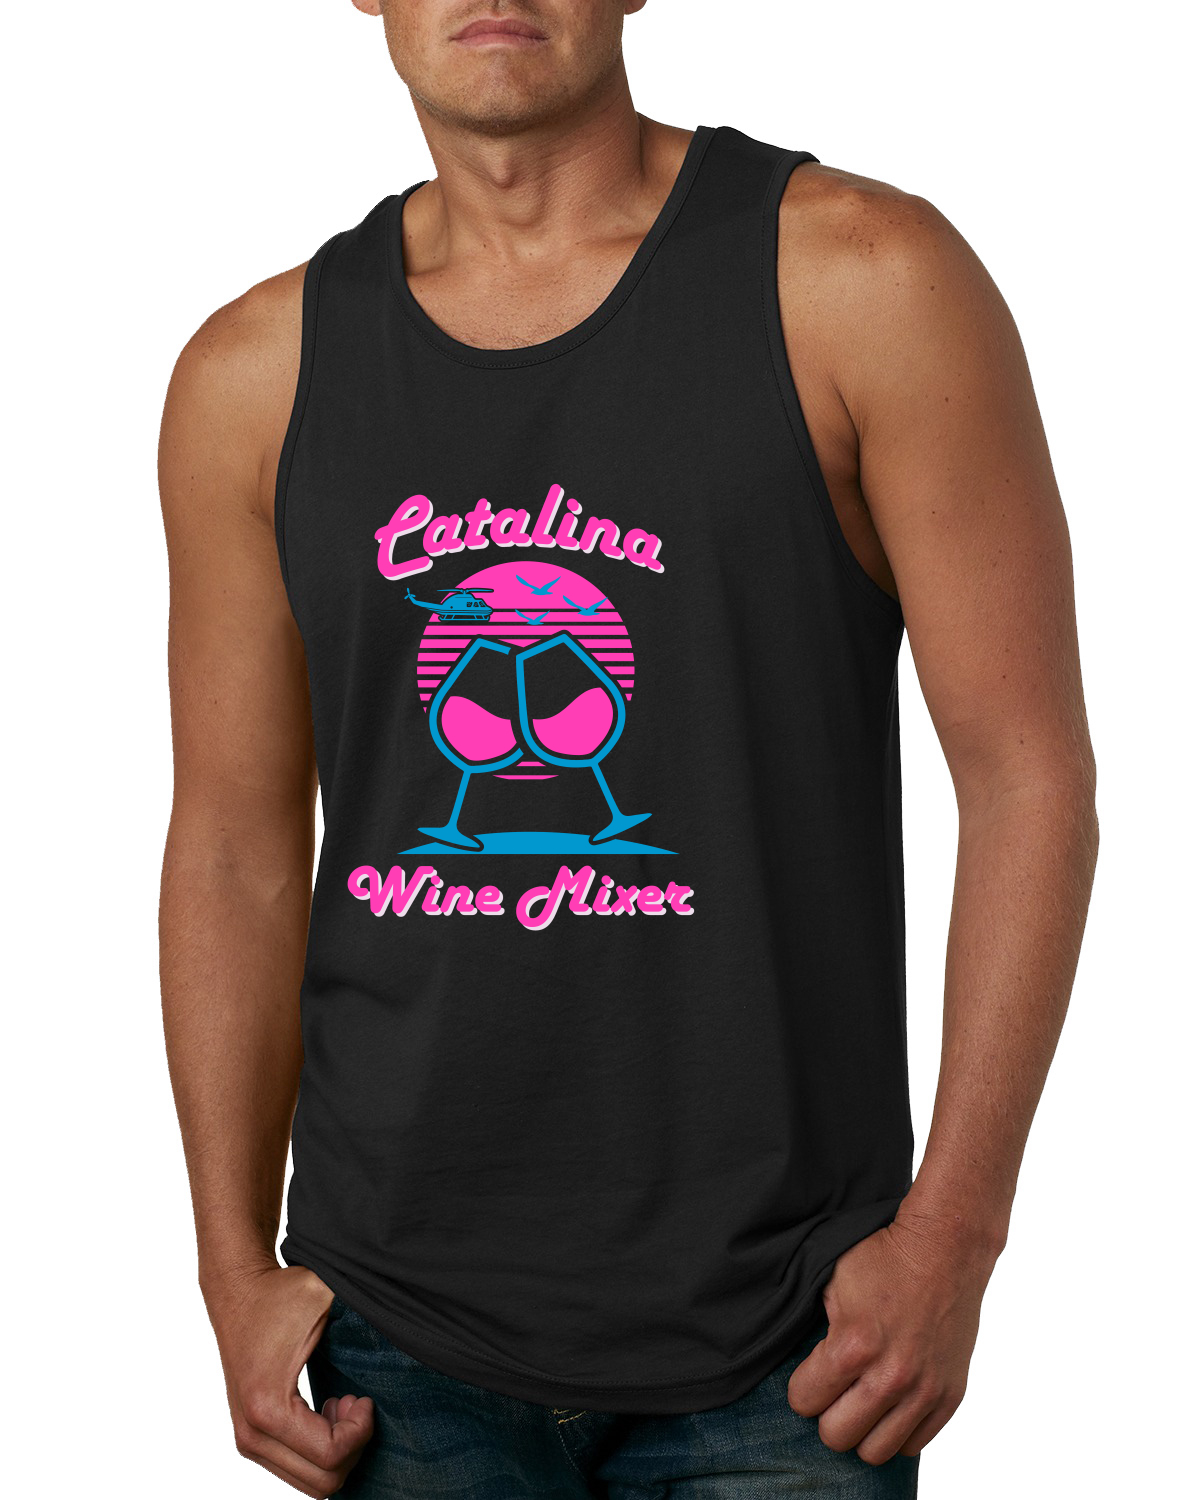 Catalina Wine Mixer Island Prestige Movie| Mens Pop Culture Graphic Tank Top, Black, Small - image 1 of 4